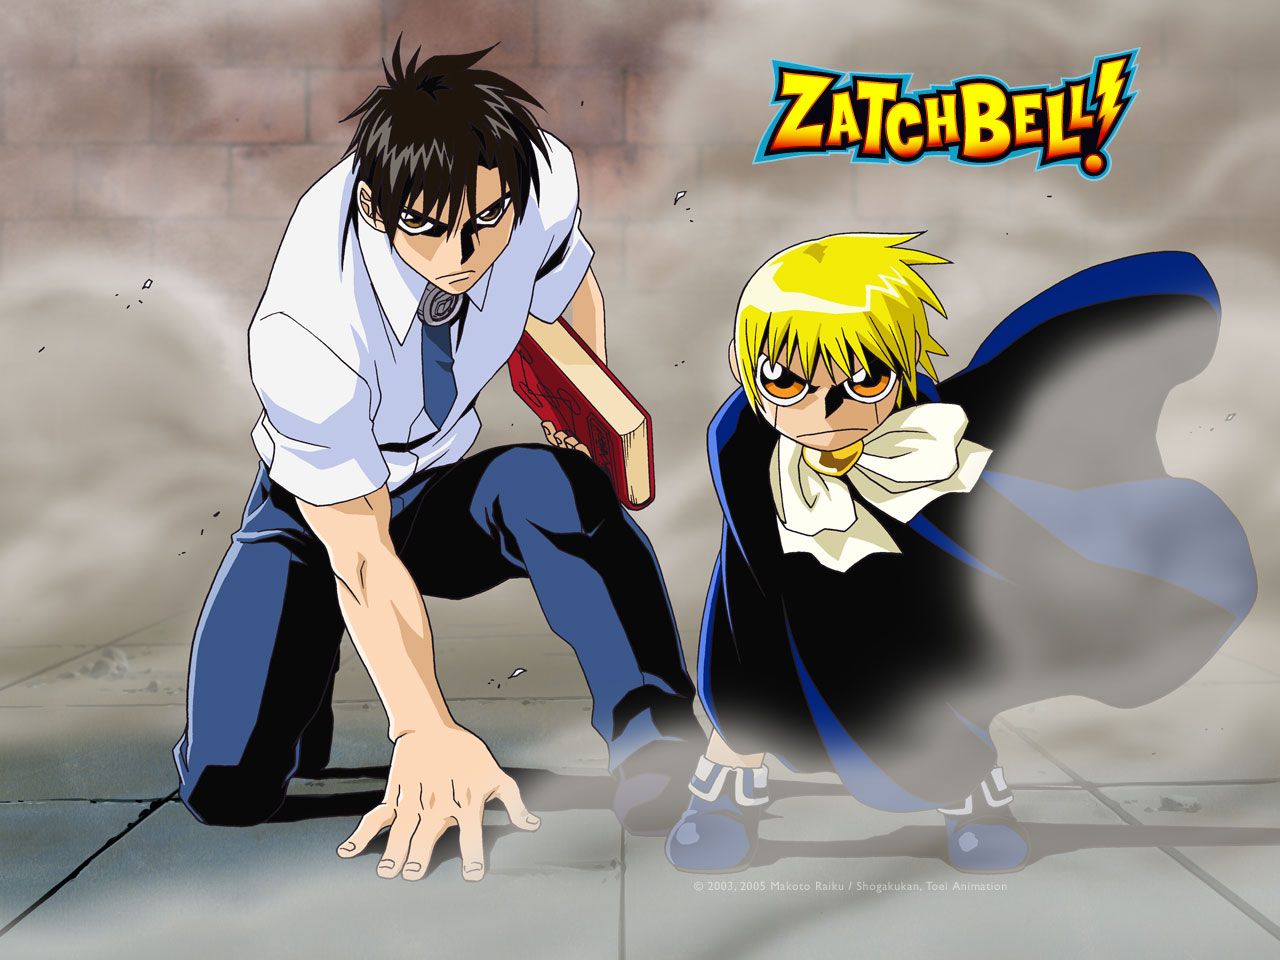 Japanese Gash Bell vs Dubbed Zatch Bell